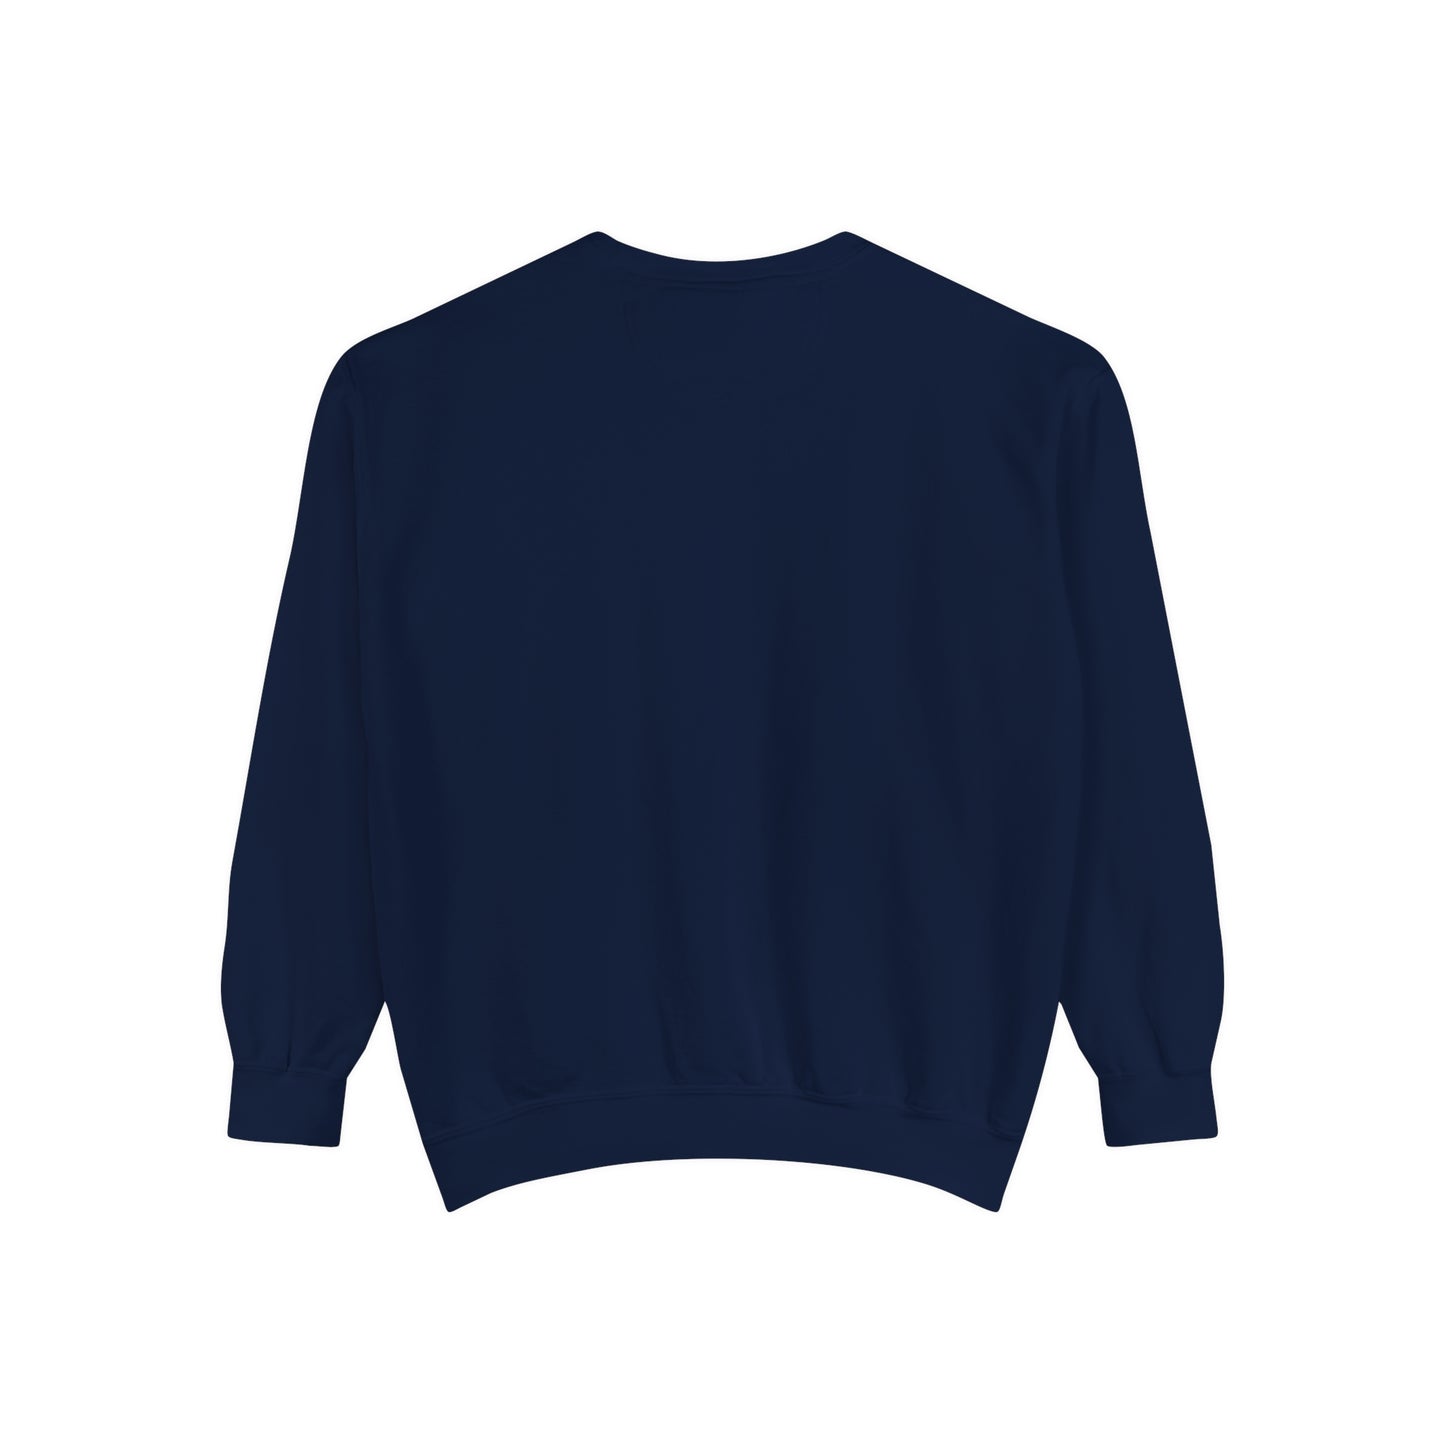 Baller - Unisex Garment-Dyed Sweatshirt